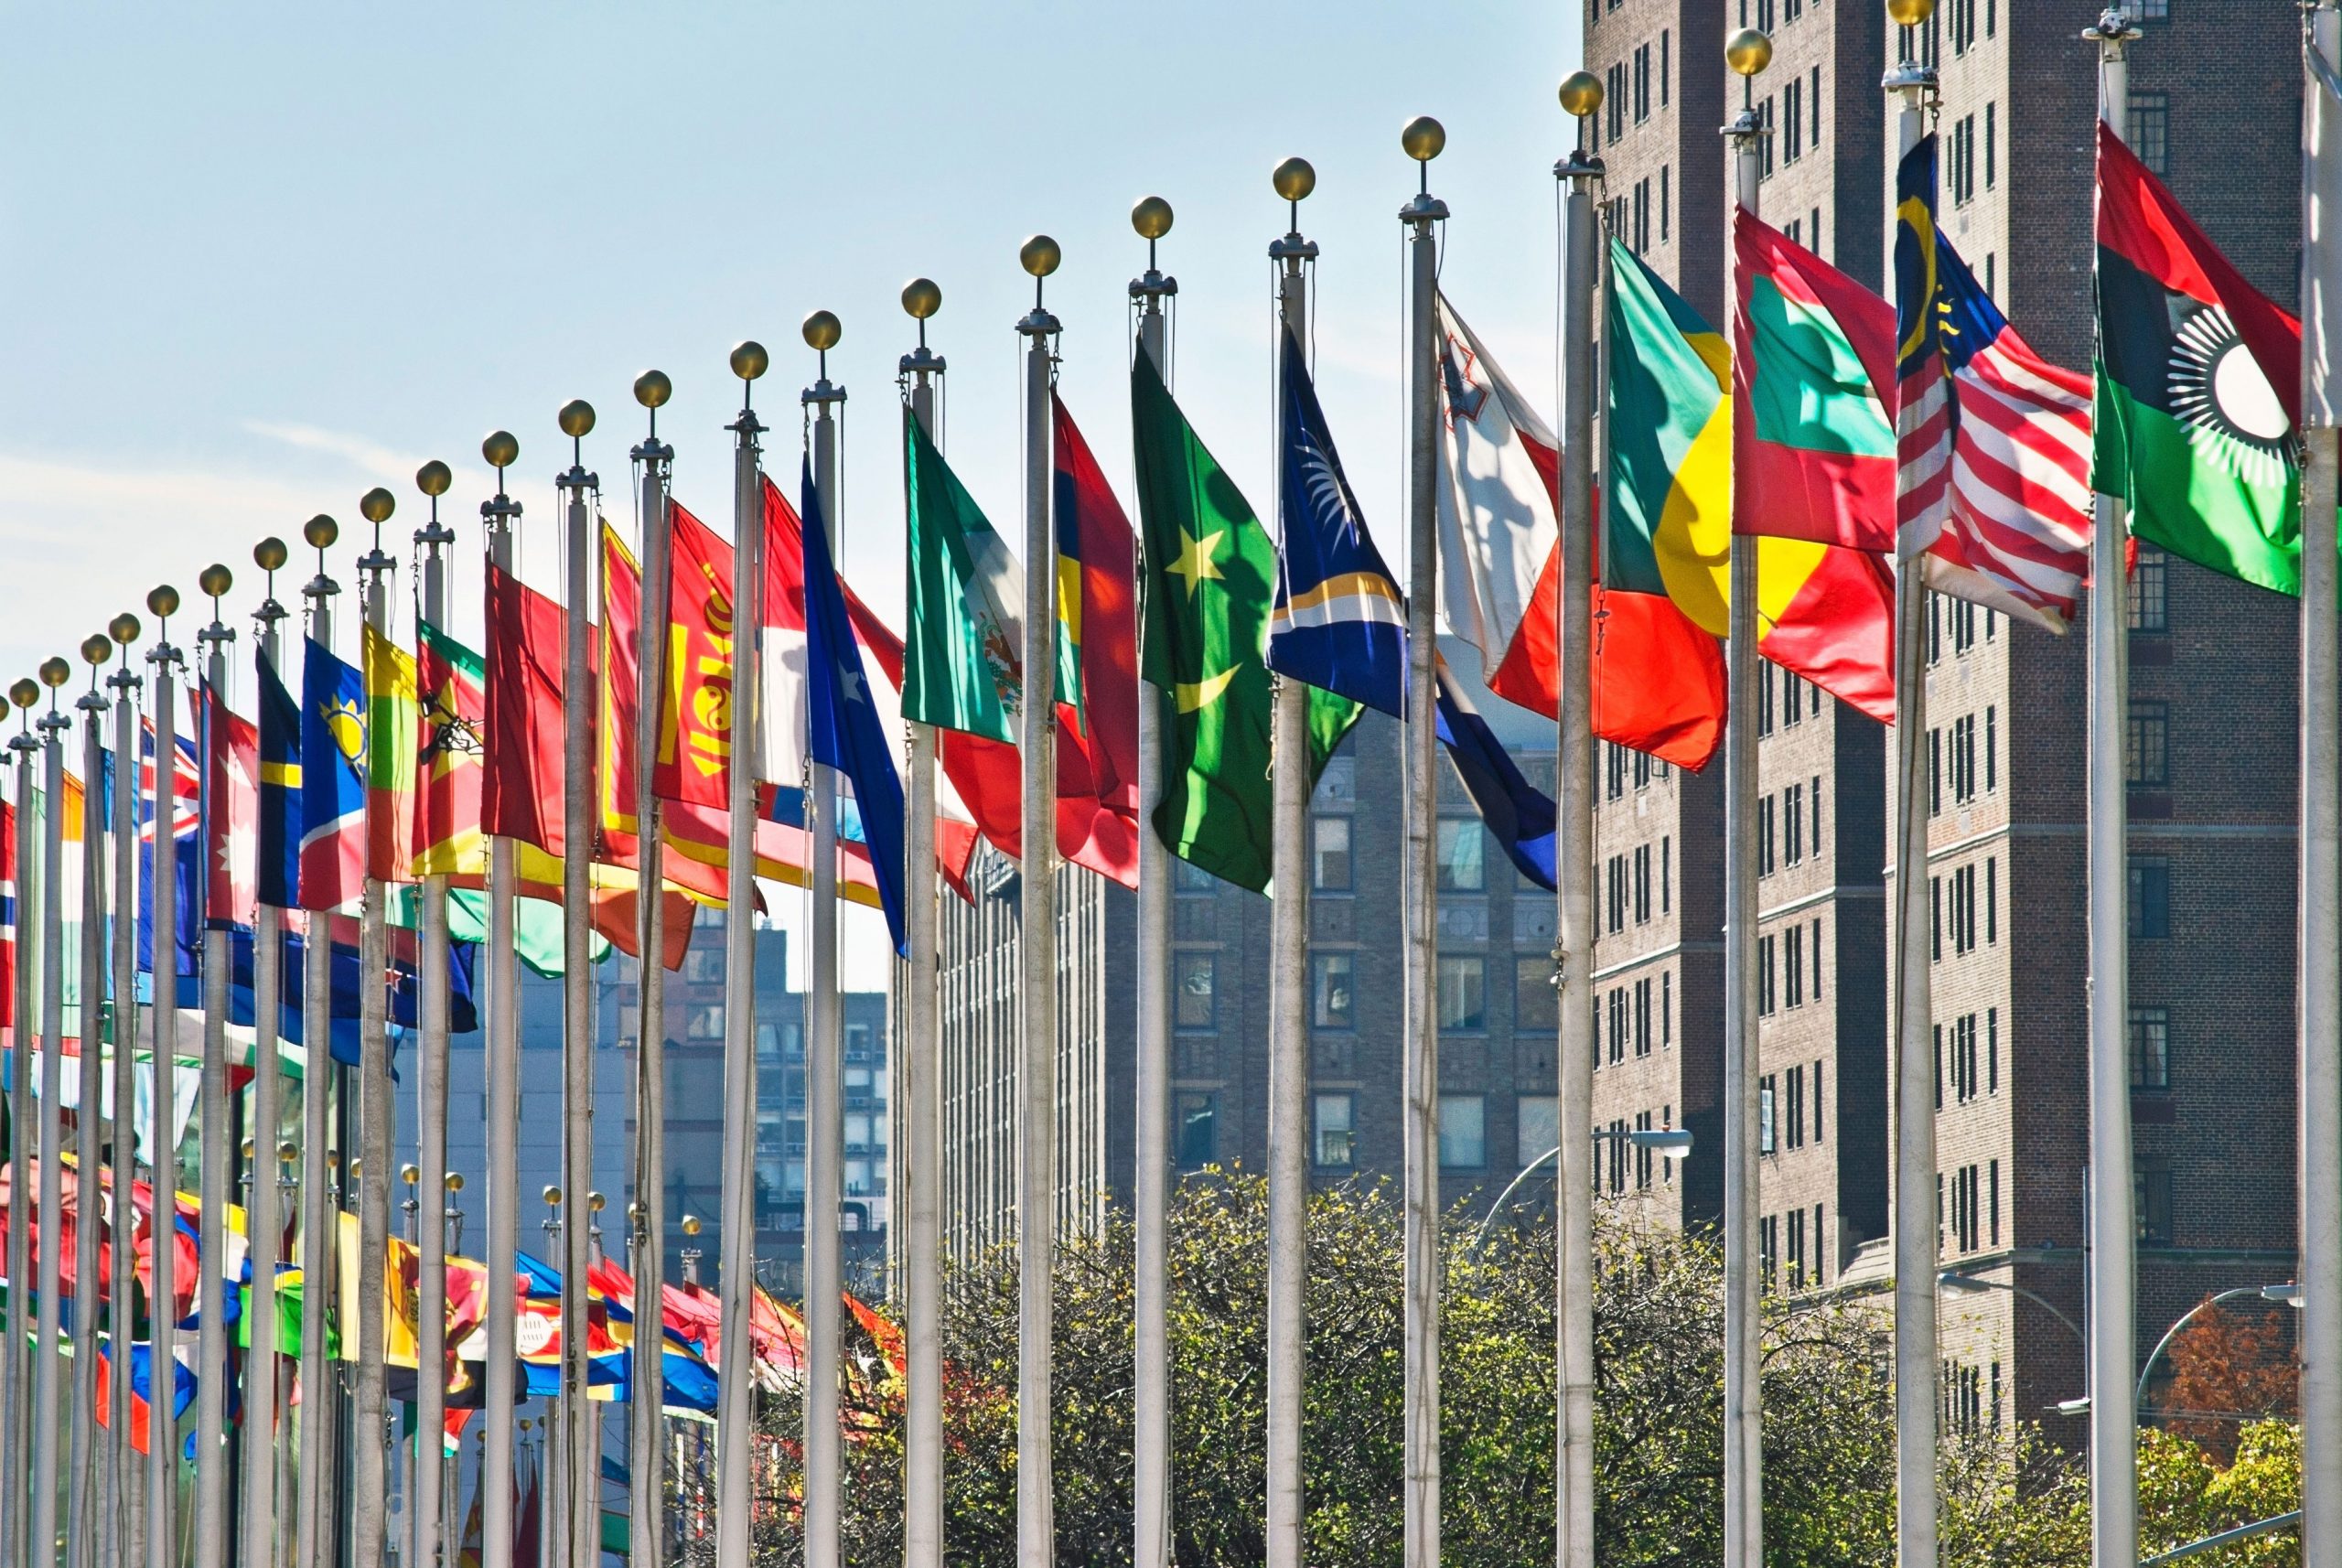 UN New York flags